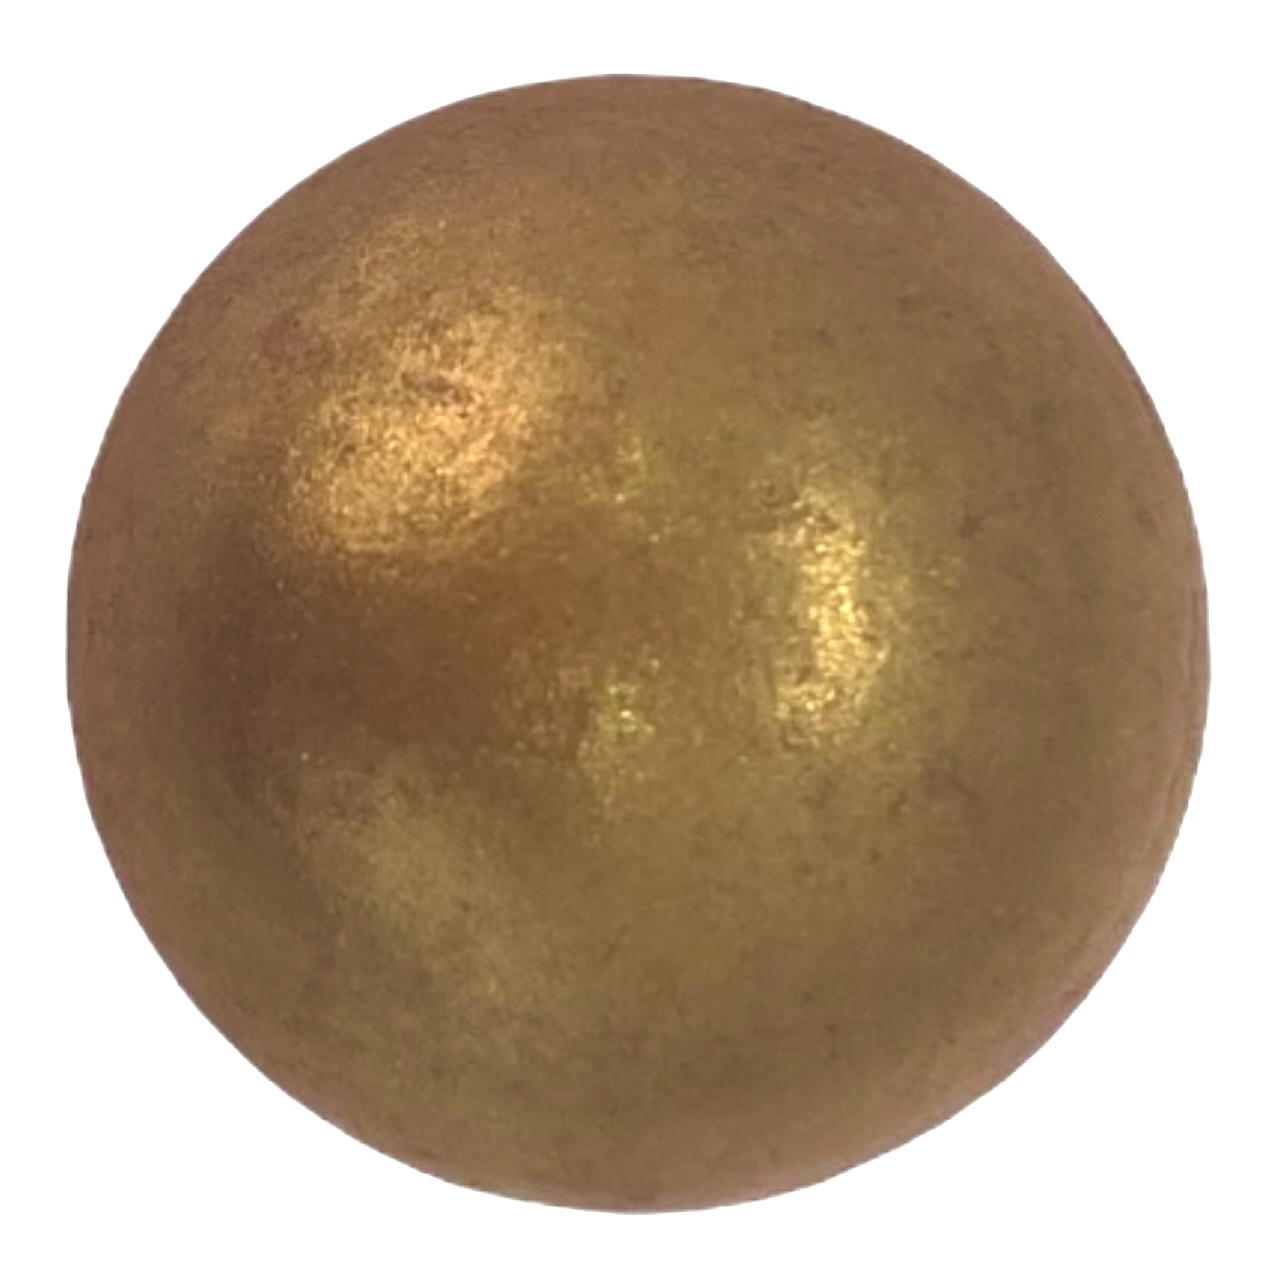 Choco Deco - Ball - Royal Gold Klein - 66 Stück (20 x 20 mm) - Shantys